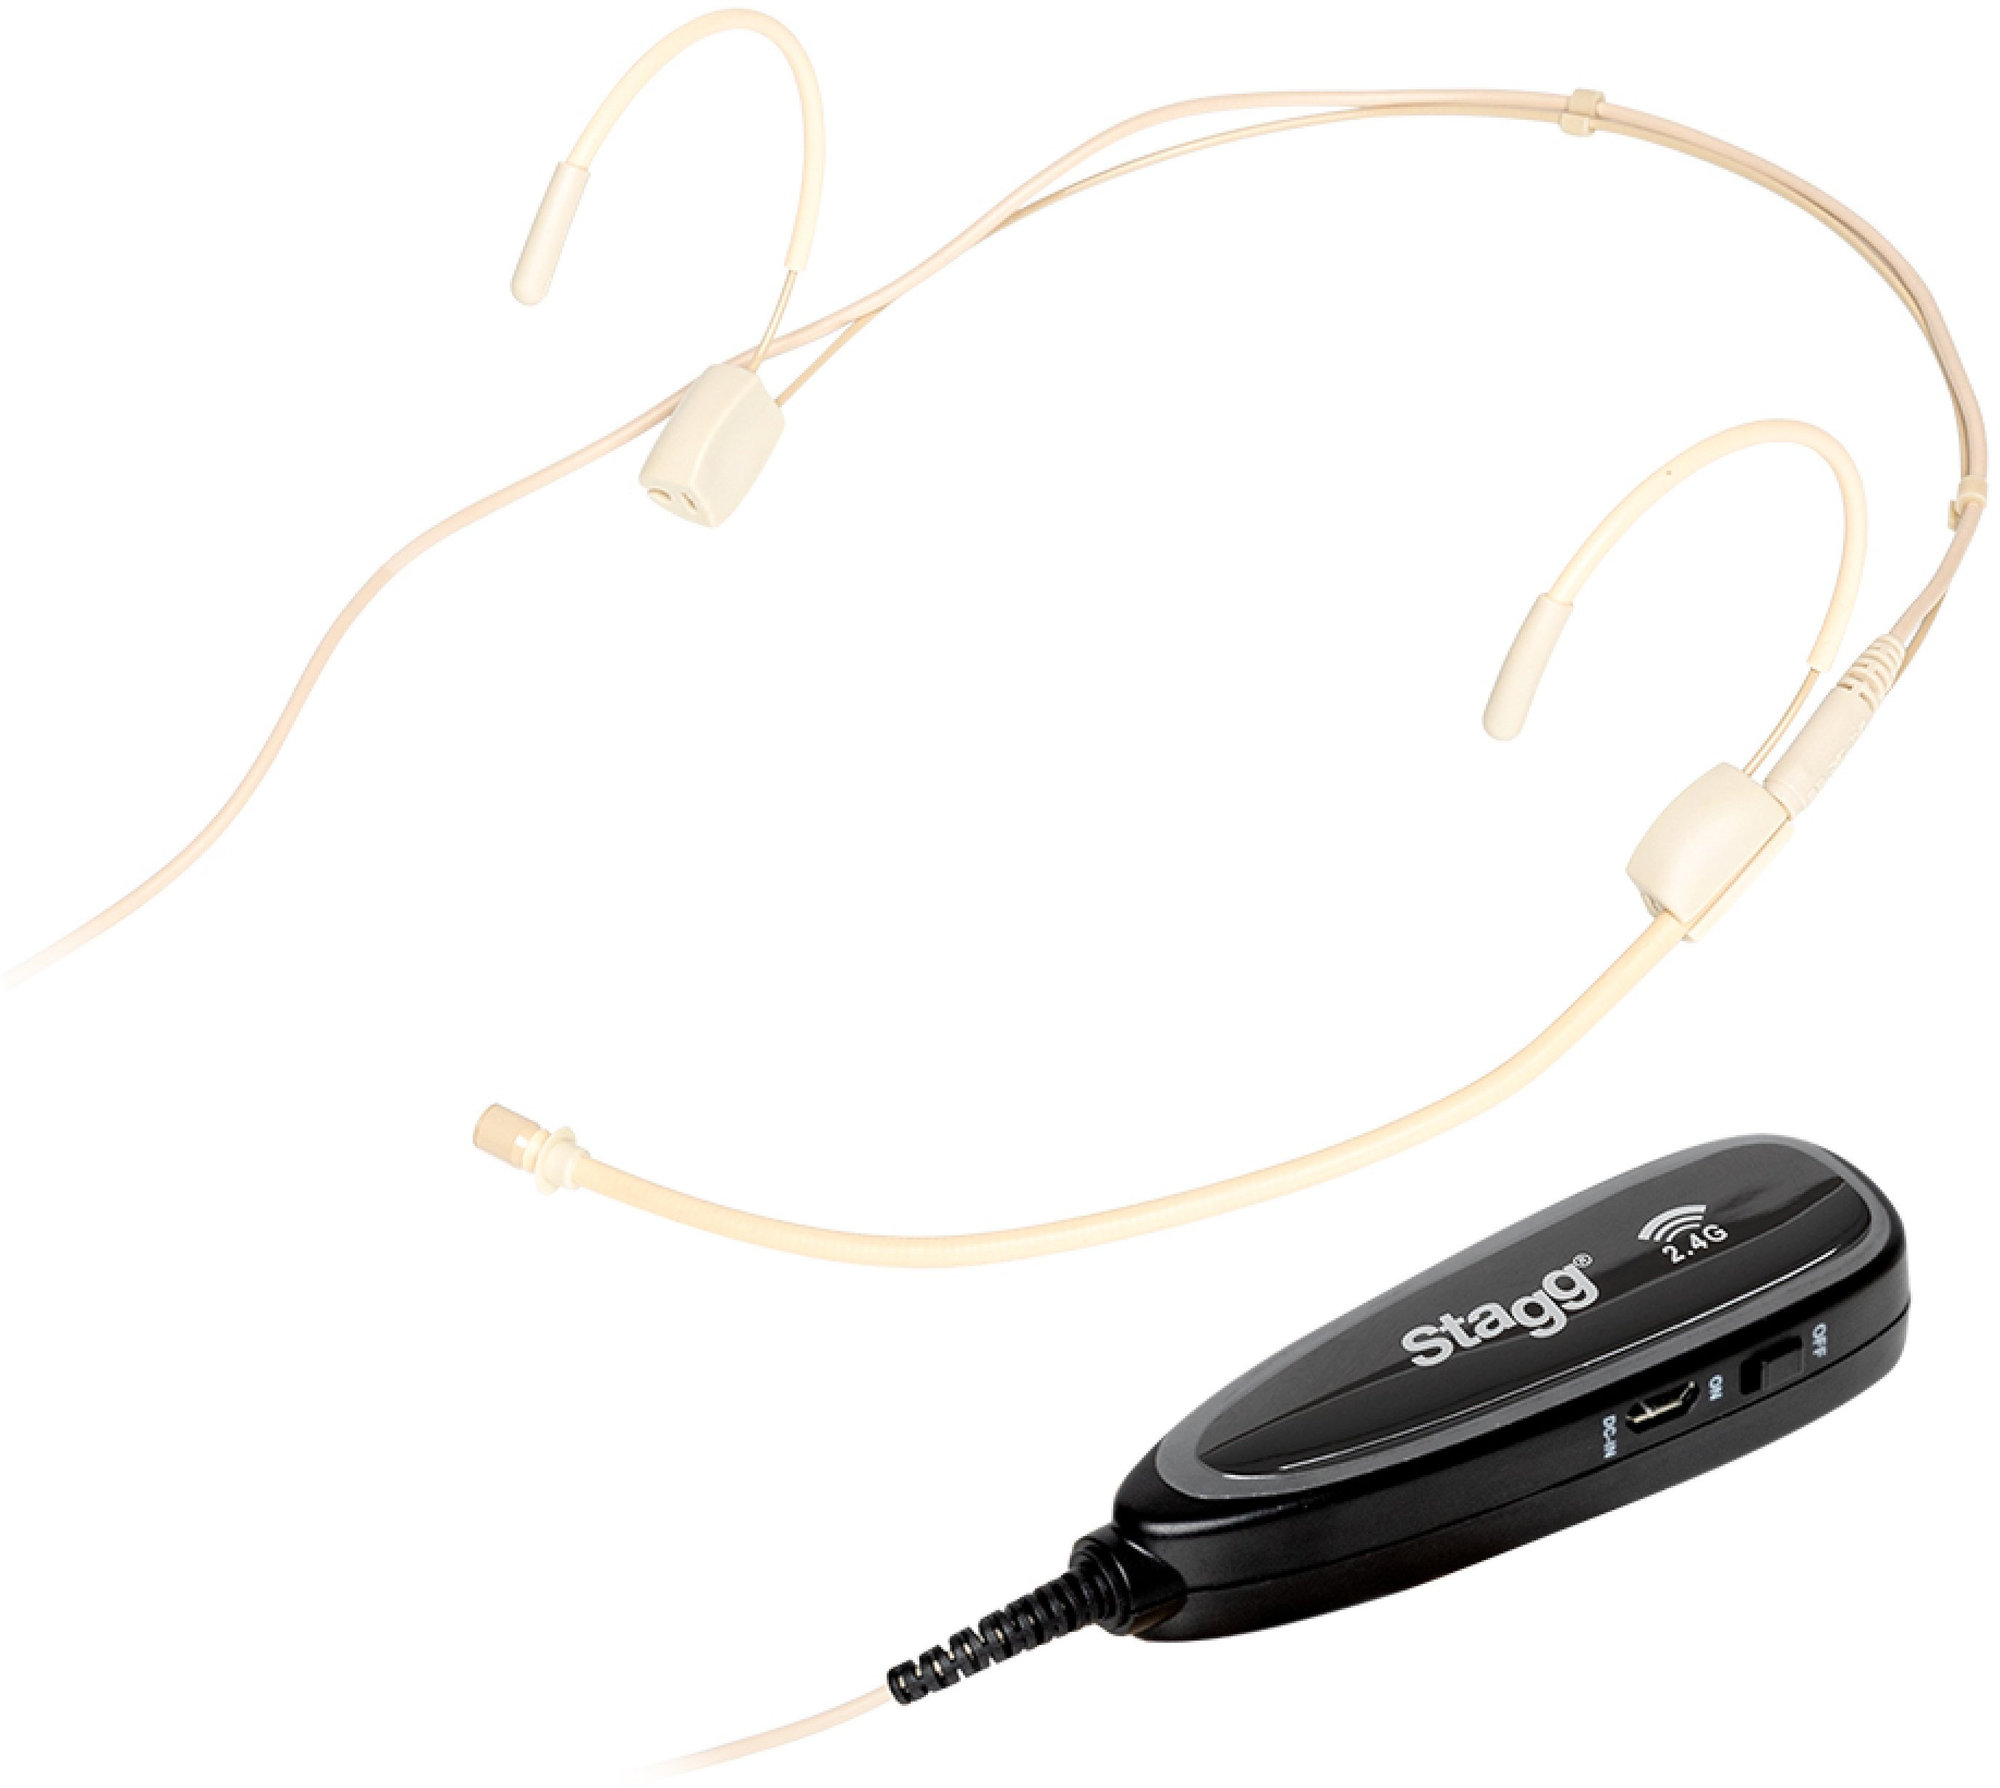 Stagg SUW 12H-BE UHF Beige Wireless Headset (2.4 GHz) Microfoni Wireless con Cuffie